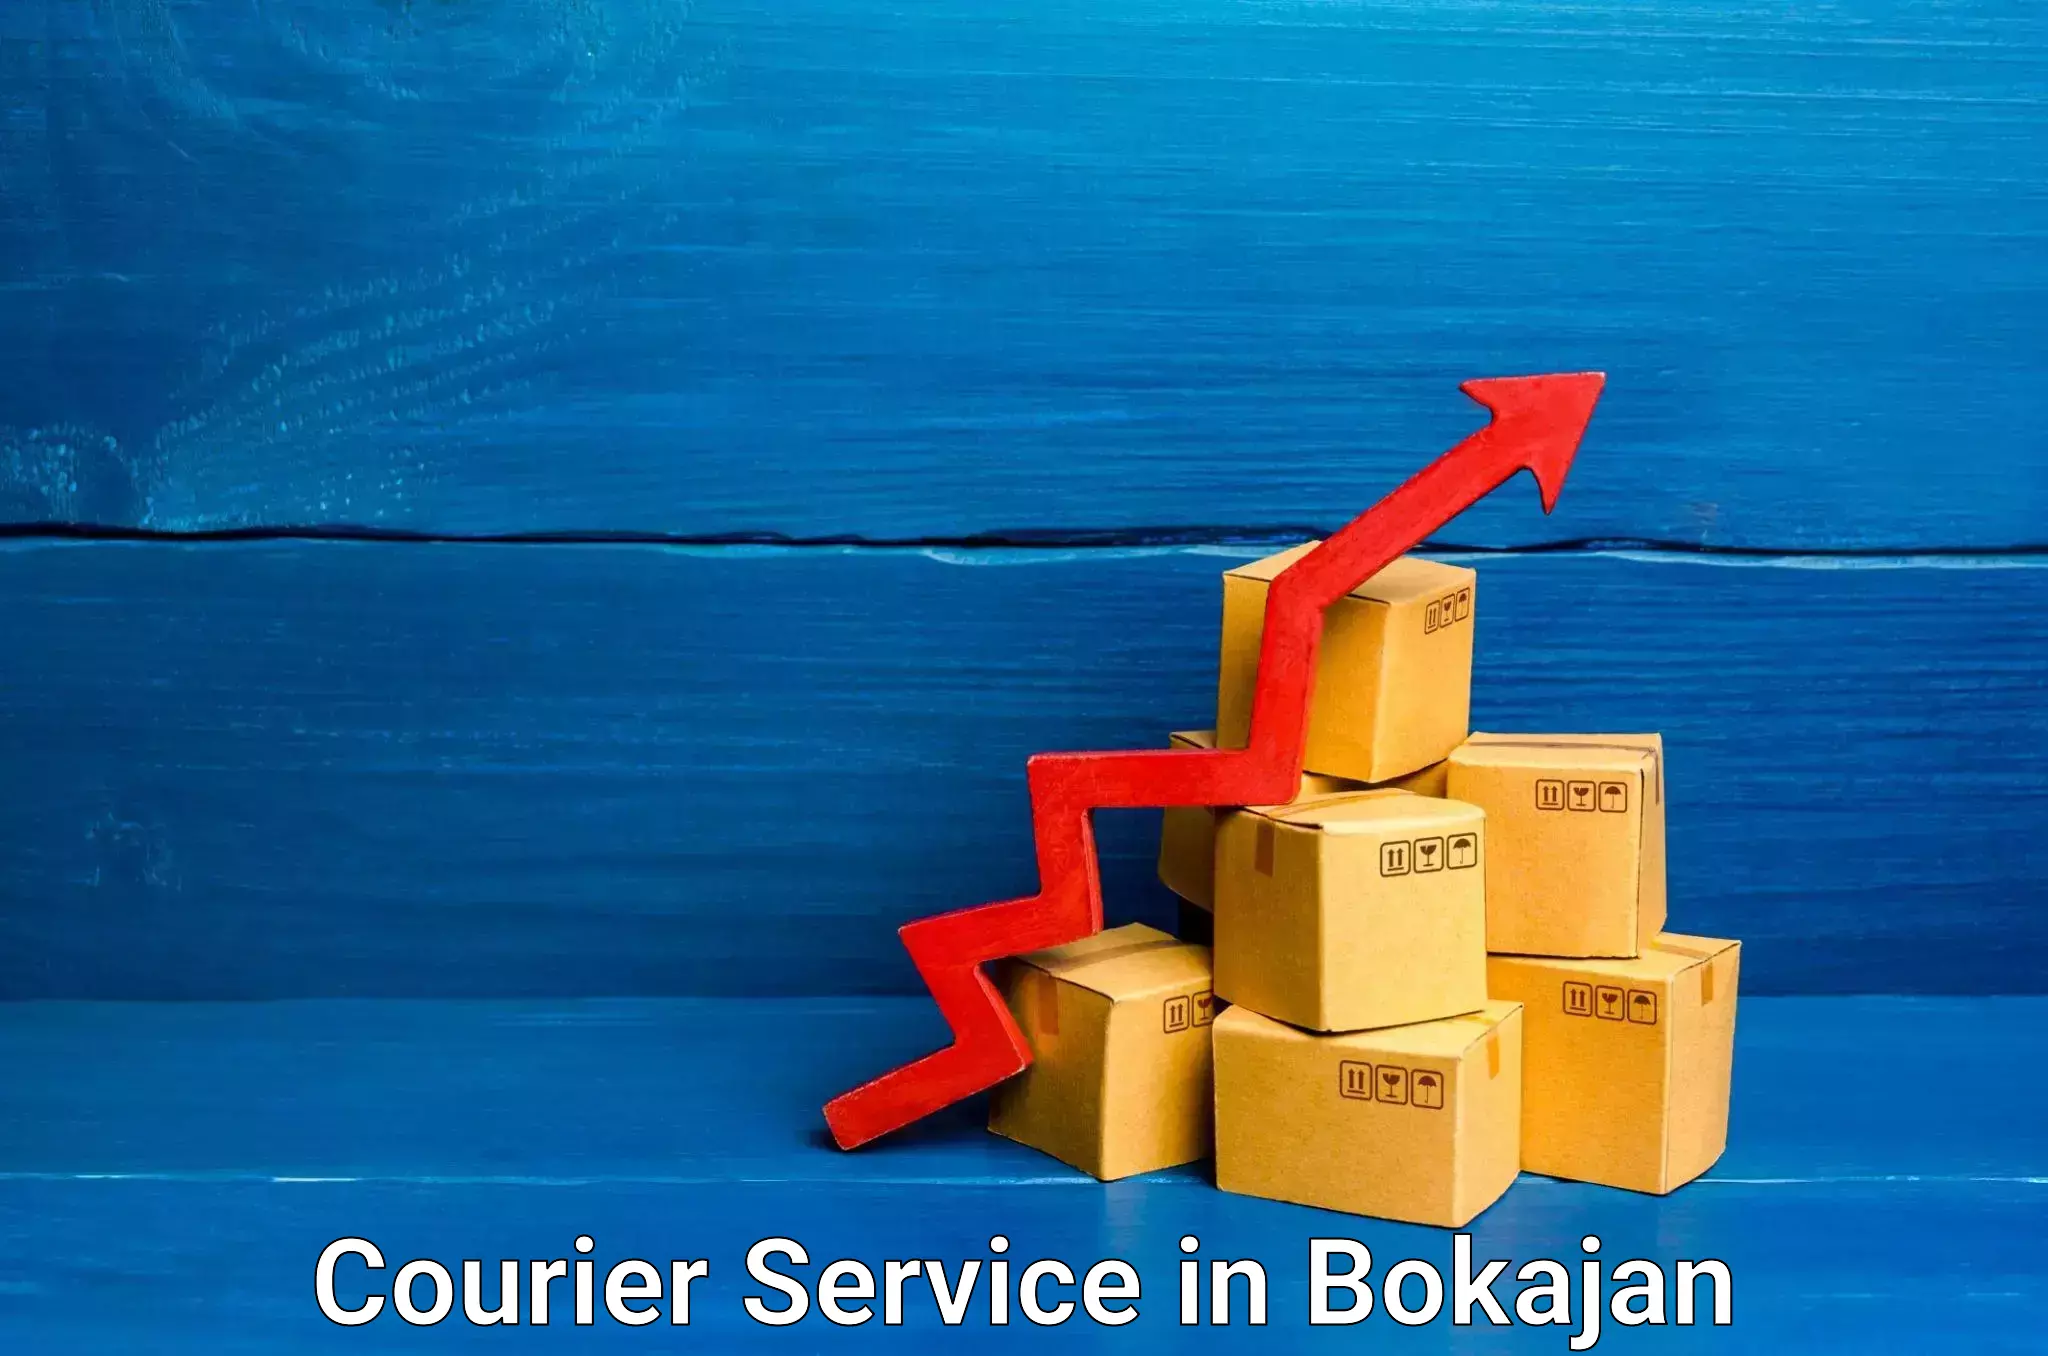 Efficient parcel delivery in Bokajan